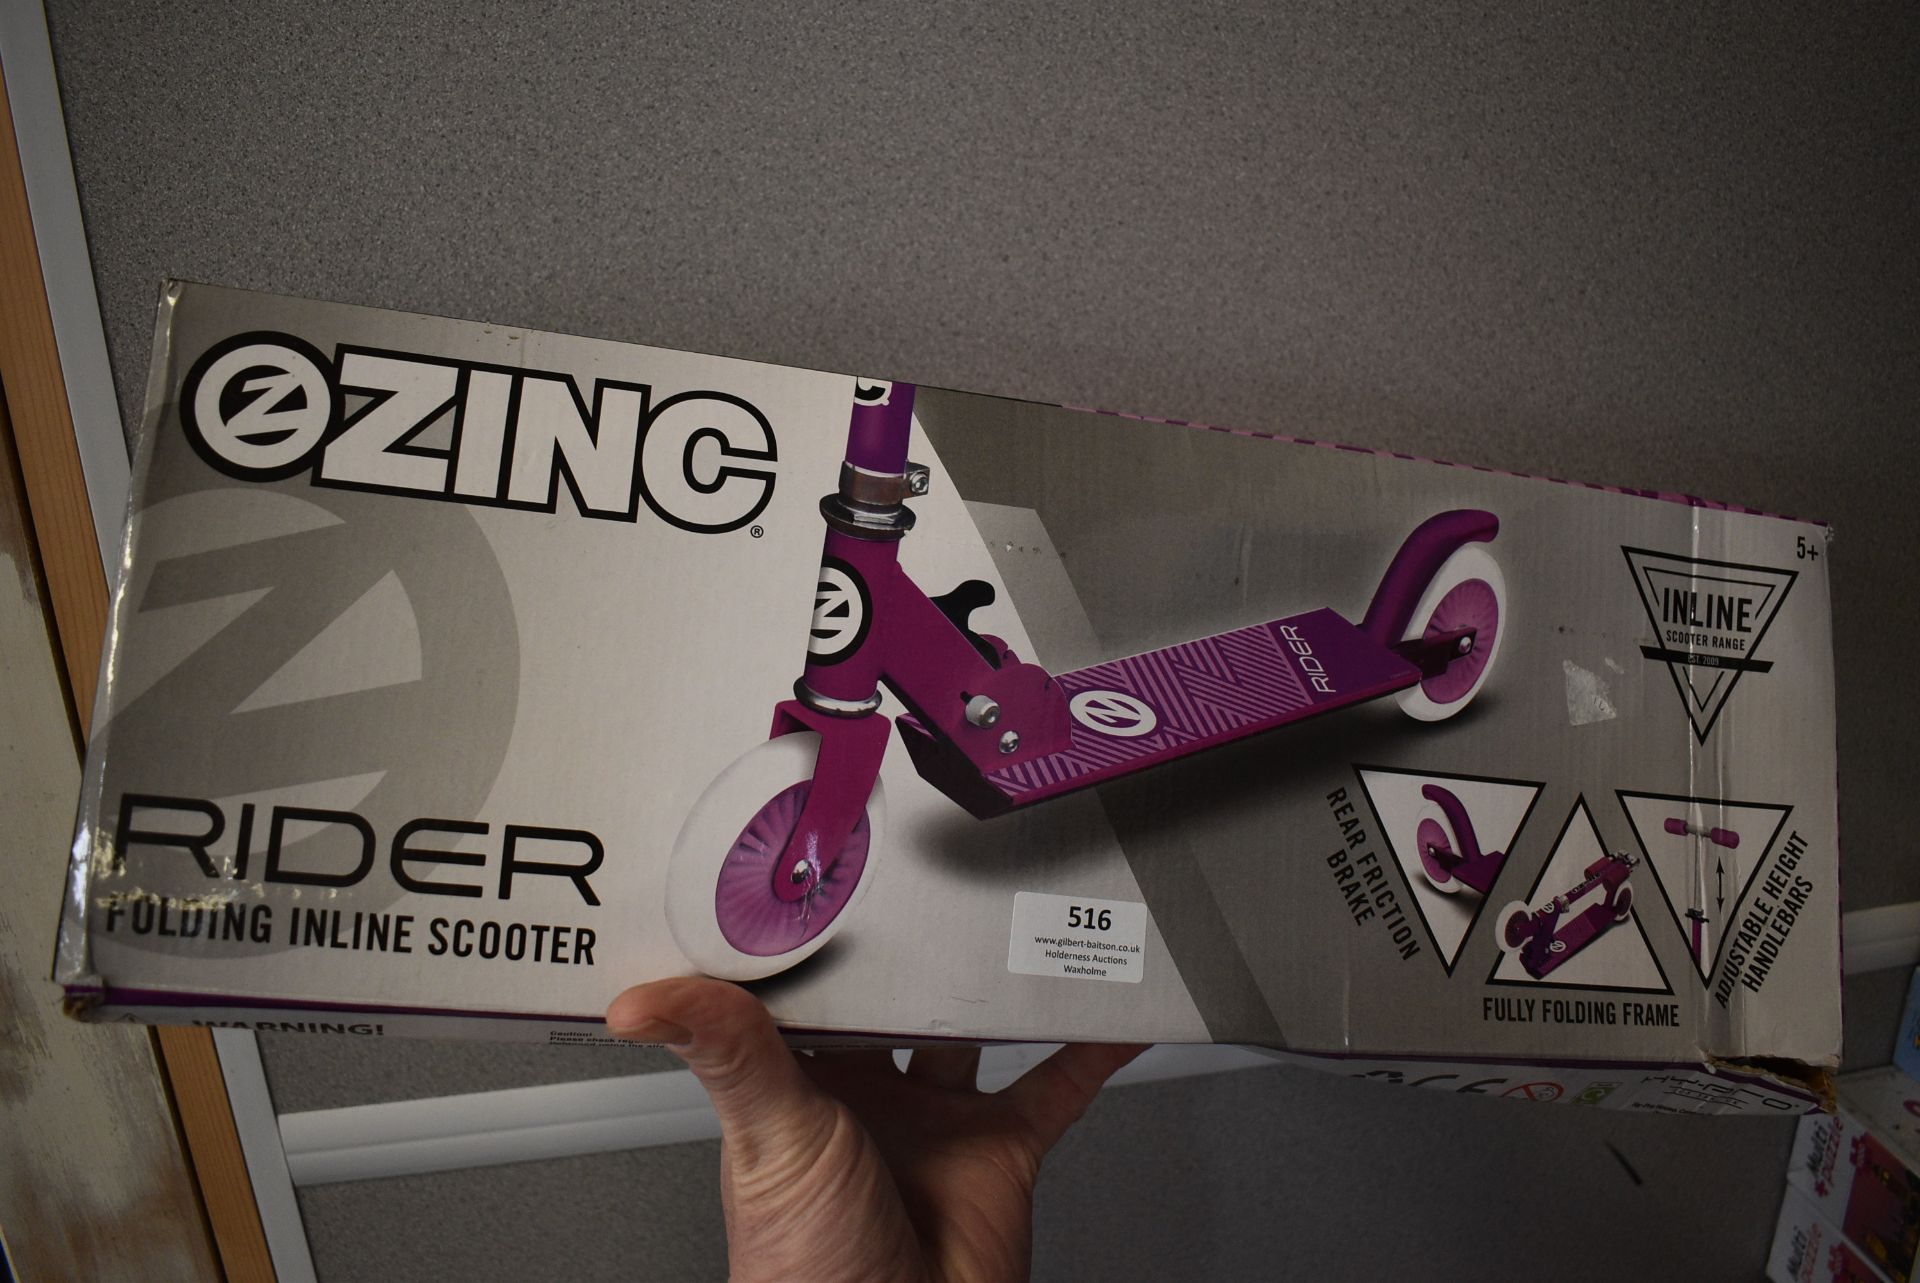 Zinc Folding Scooter - Image 2 of 4